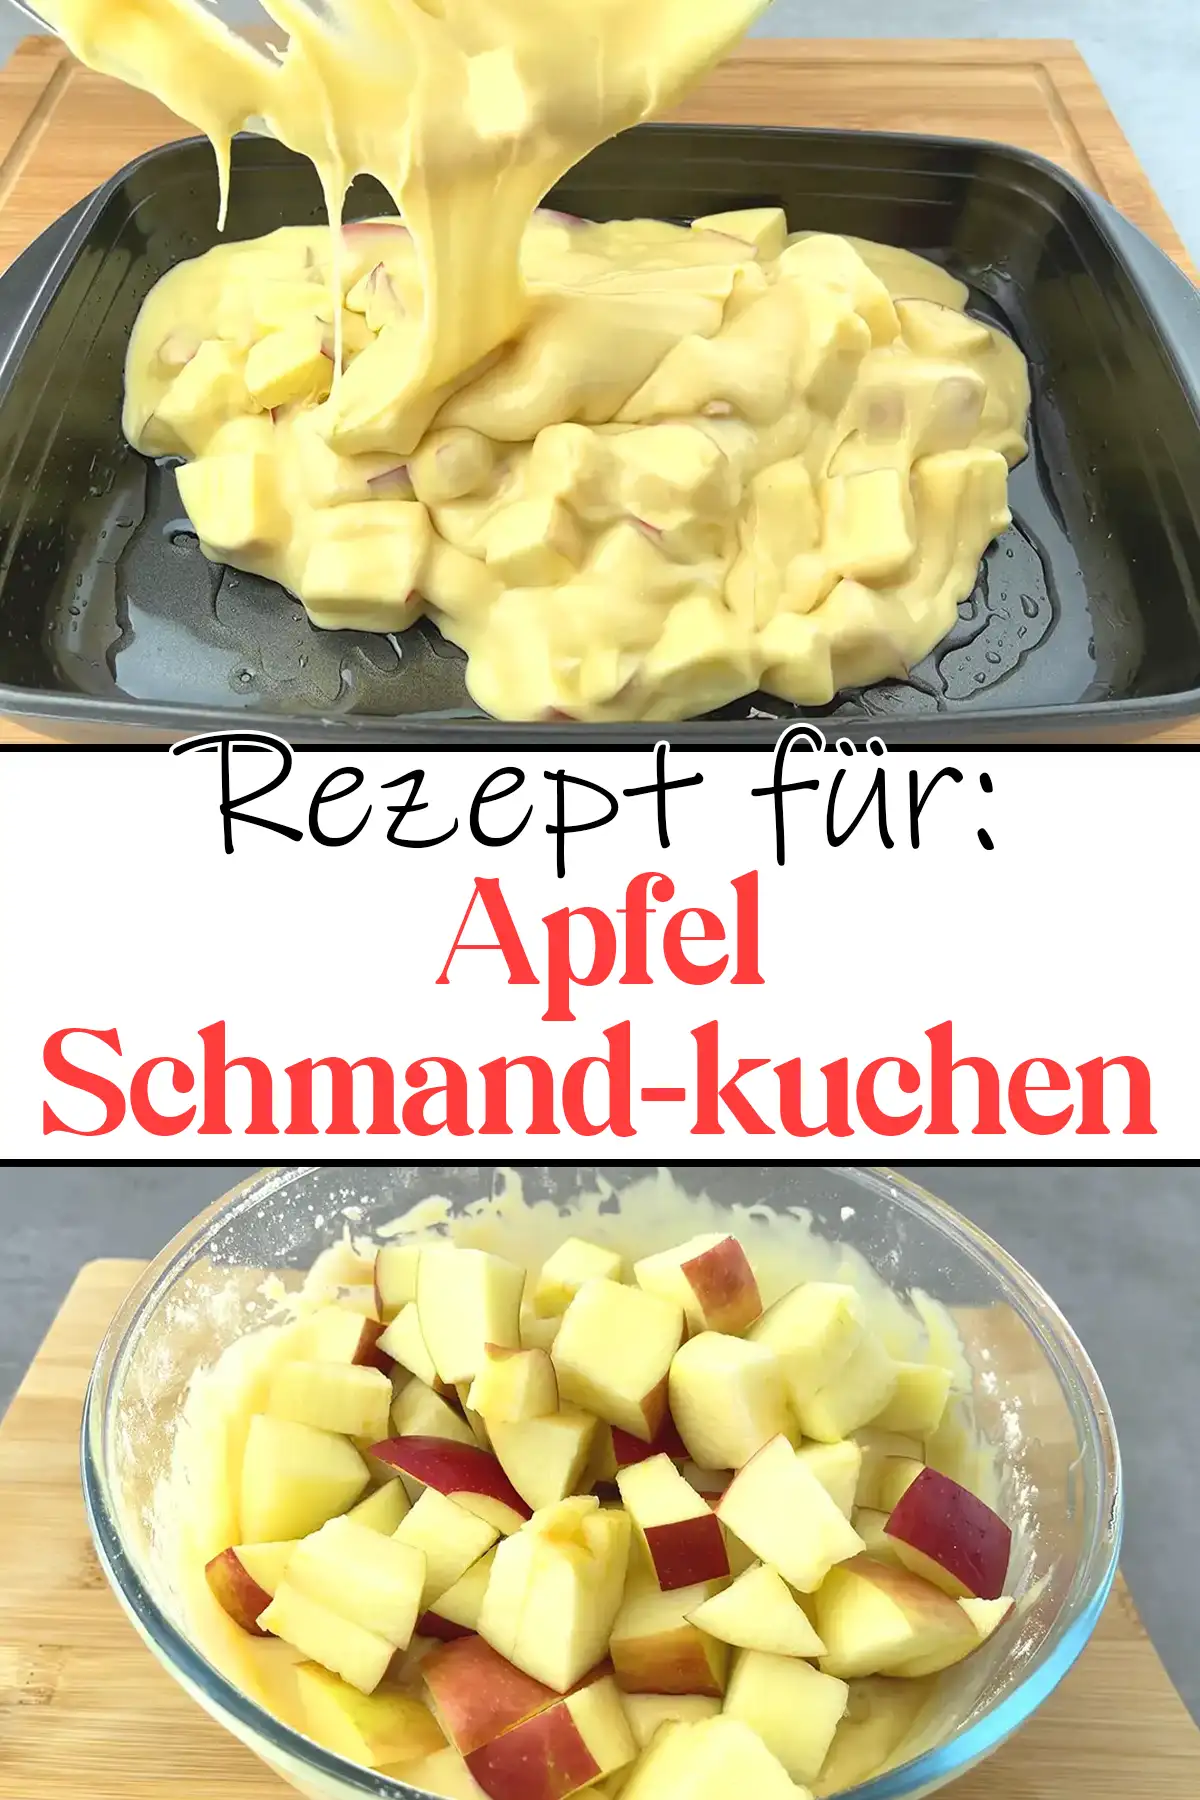 Apfel Schmand-kuchen Rezept